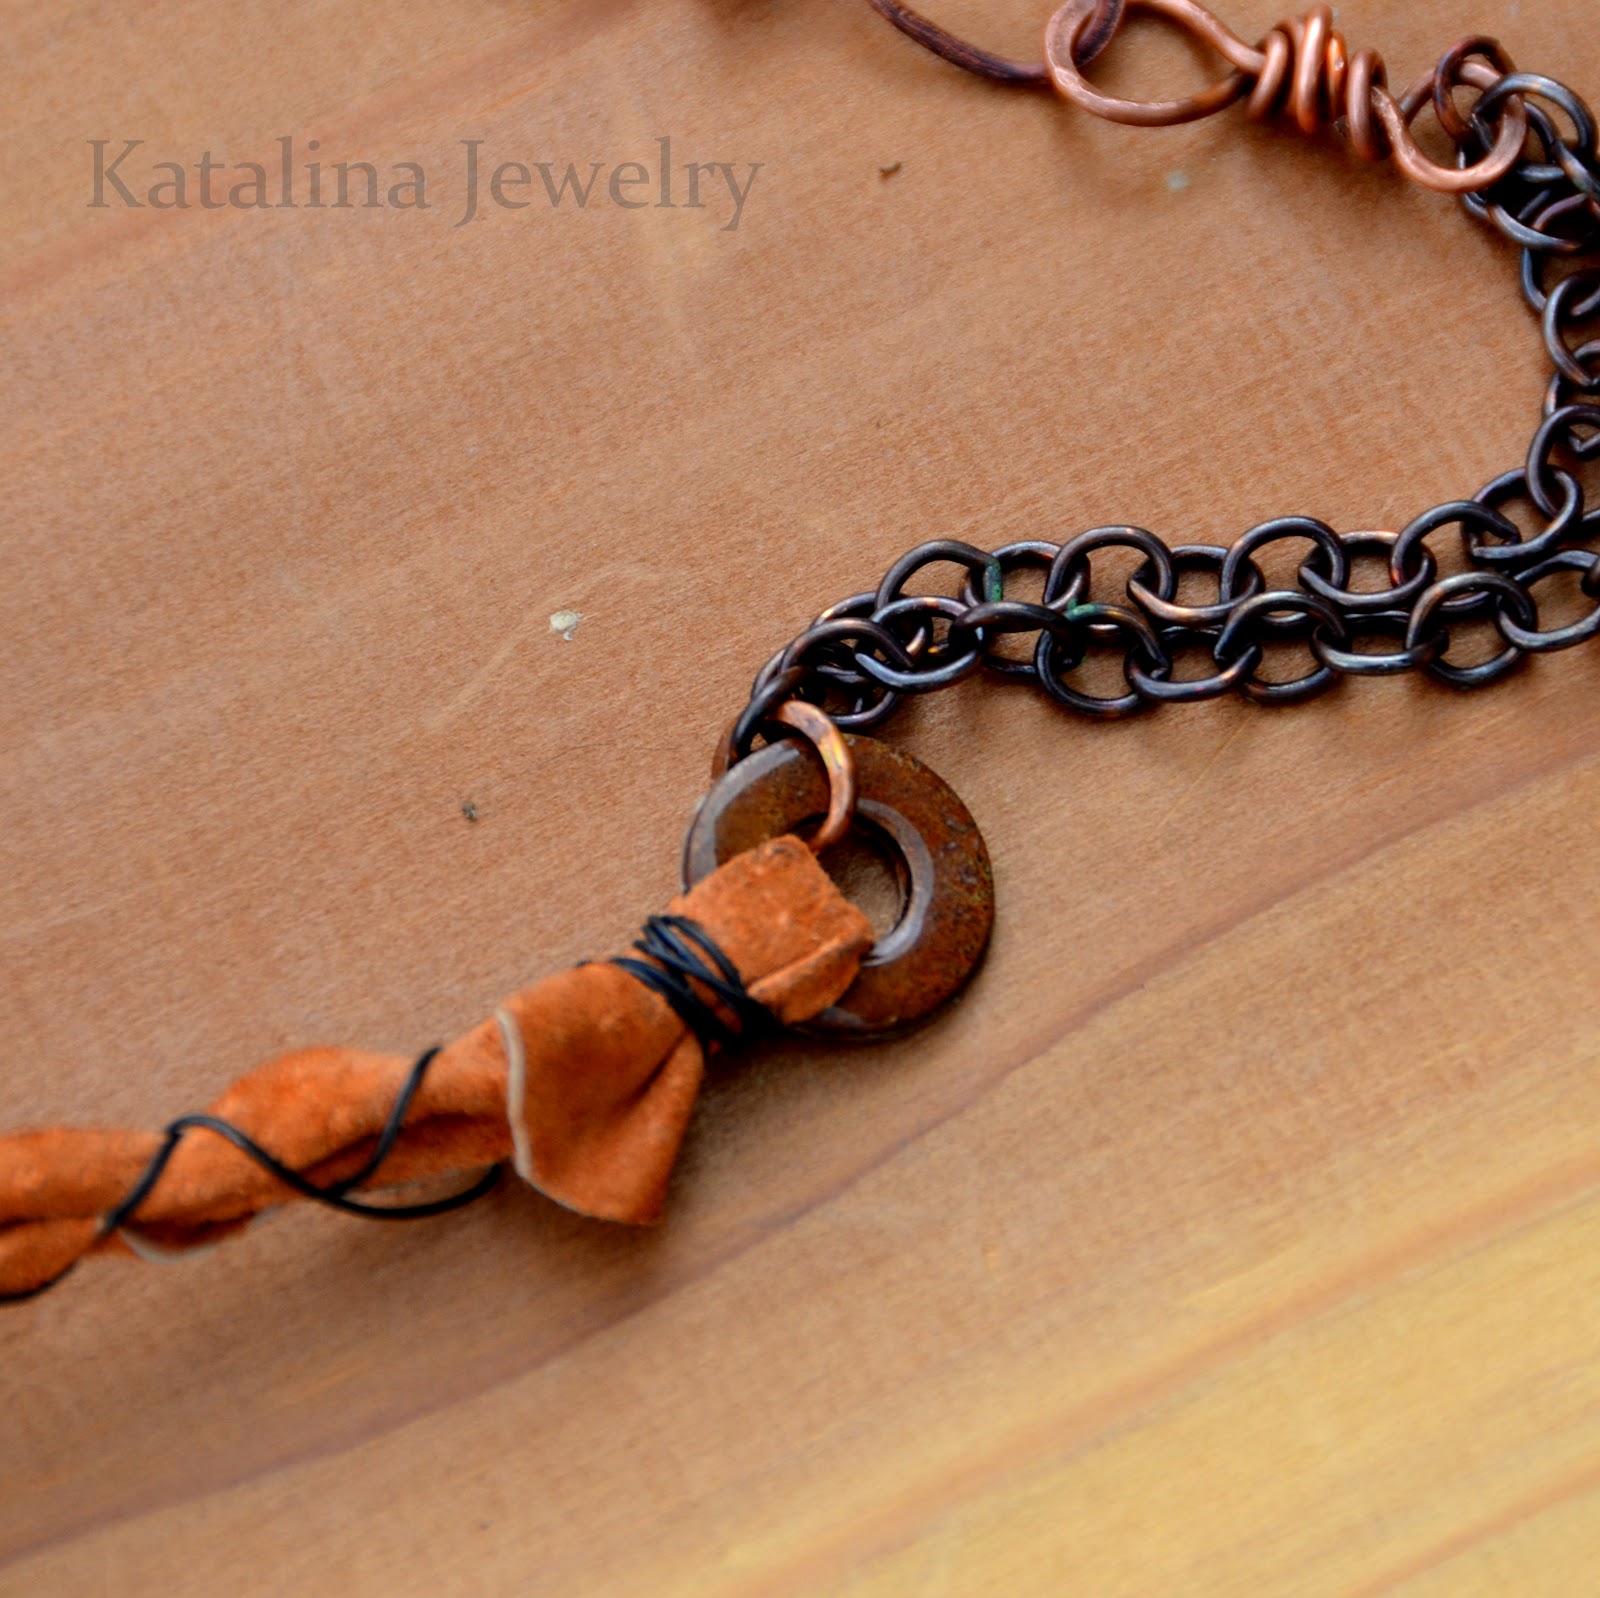 Katalina Jewelry: Enhancing and Protecting a Rusted Metal Patina